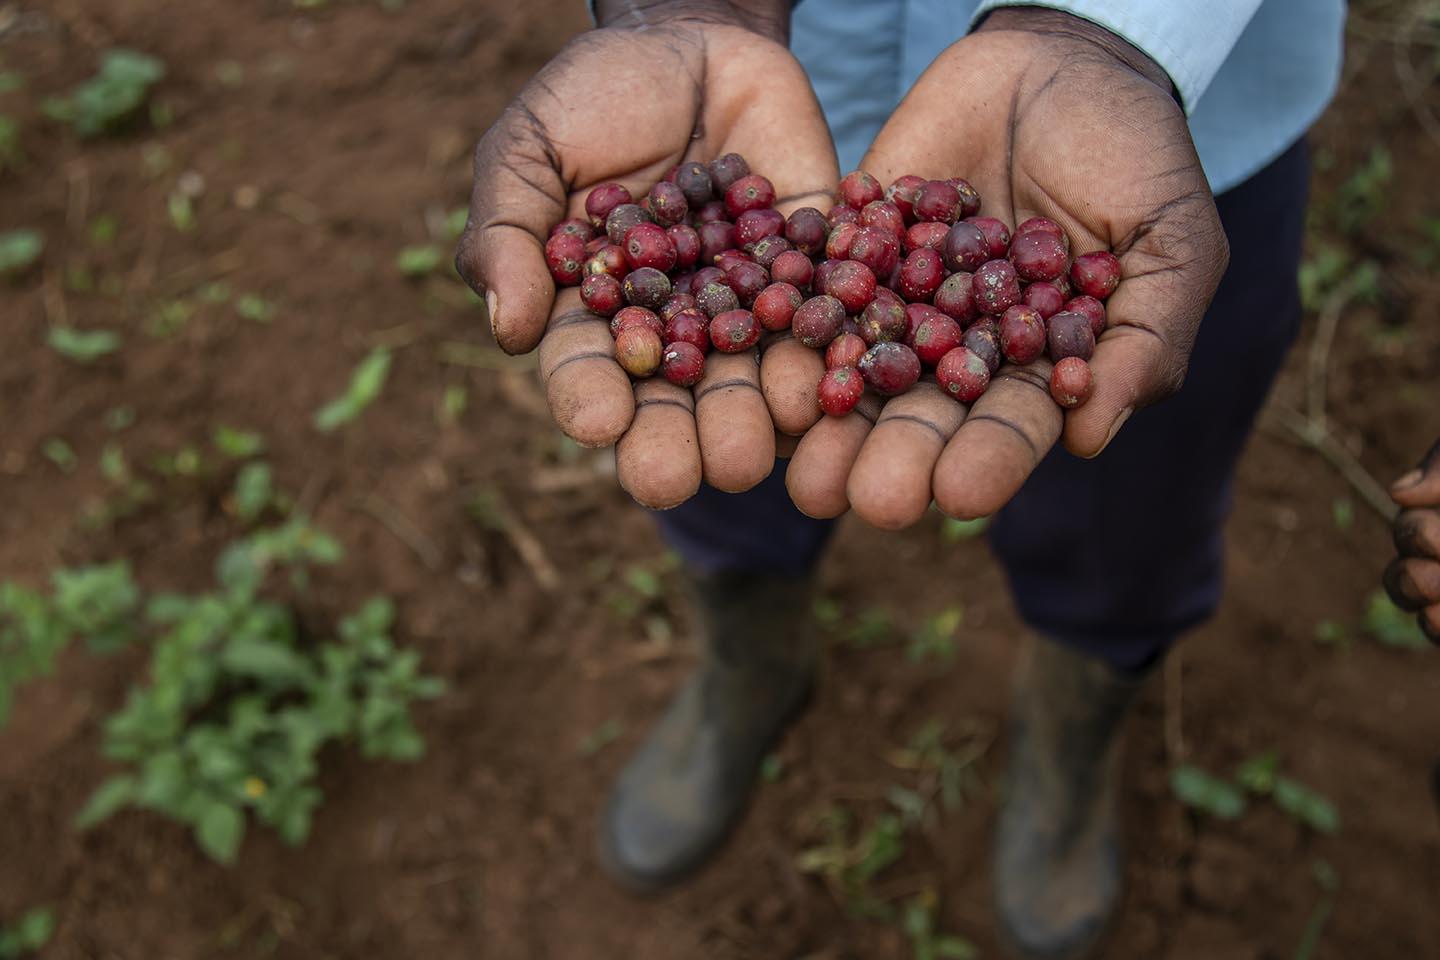 Fairtrade Africa